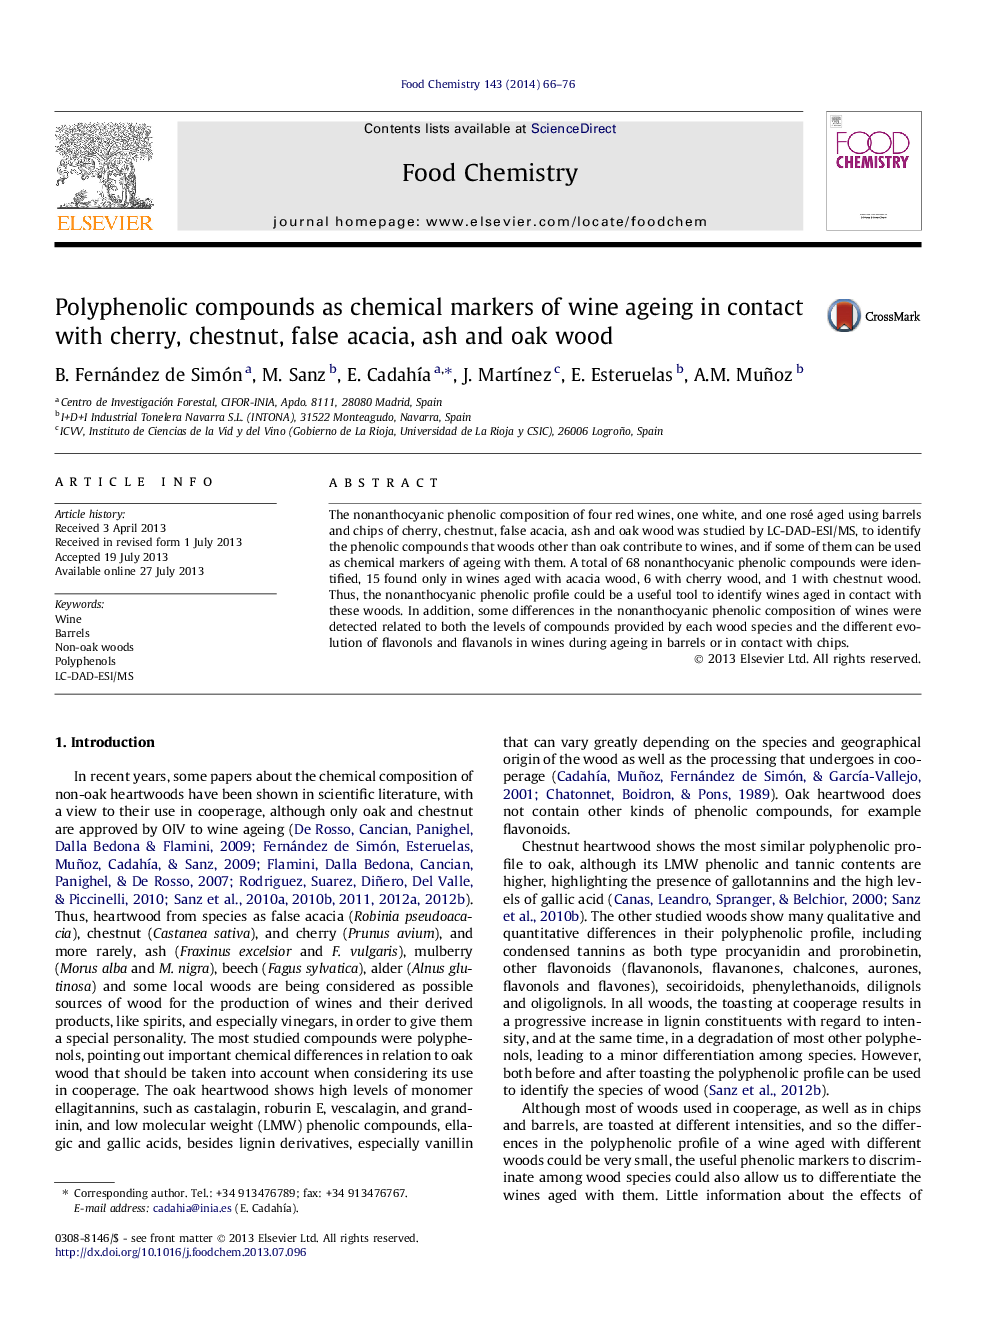 ترکیبات پلی فنل به عنوان نشانگر شیمیایی پیری شراب در تماس با گیلاس، شاه بلوط، آکواریوم نادر، خاکستر و چوب بلوط 